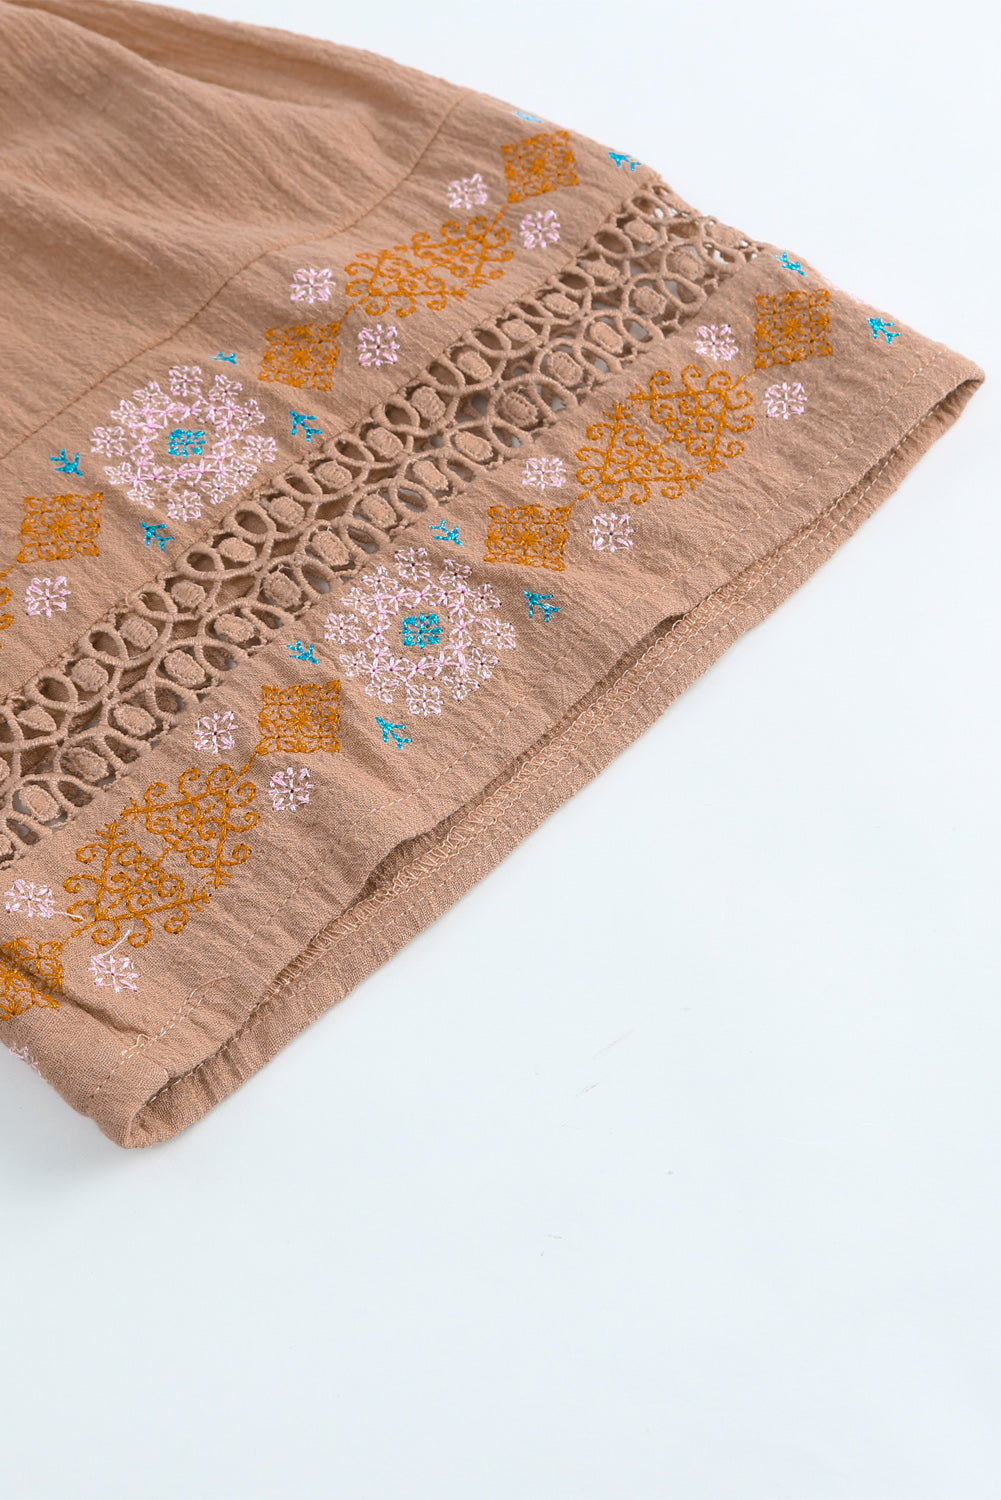 Brown Tassel Drawstring Embroidered Half Sleeve V Neck Top